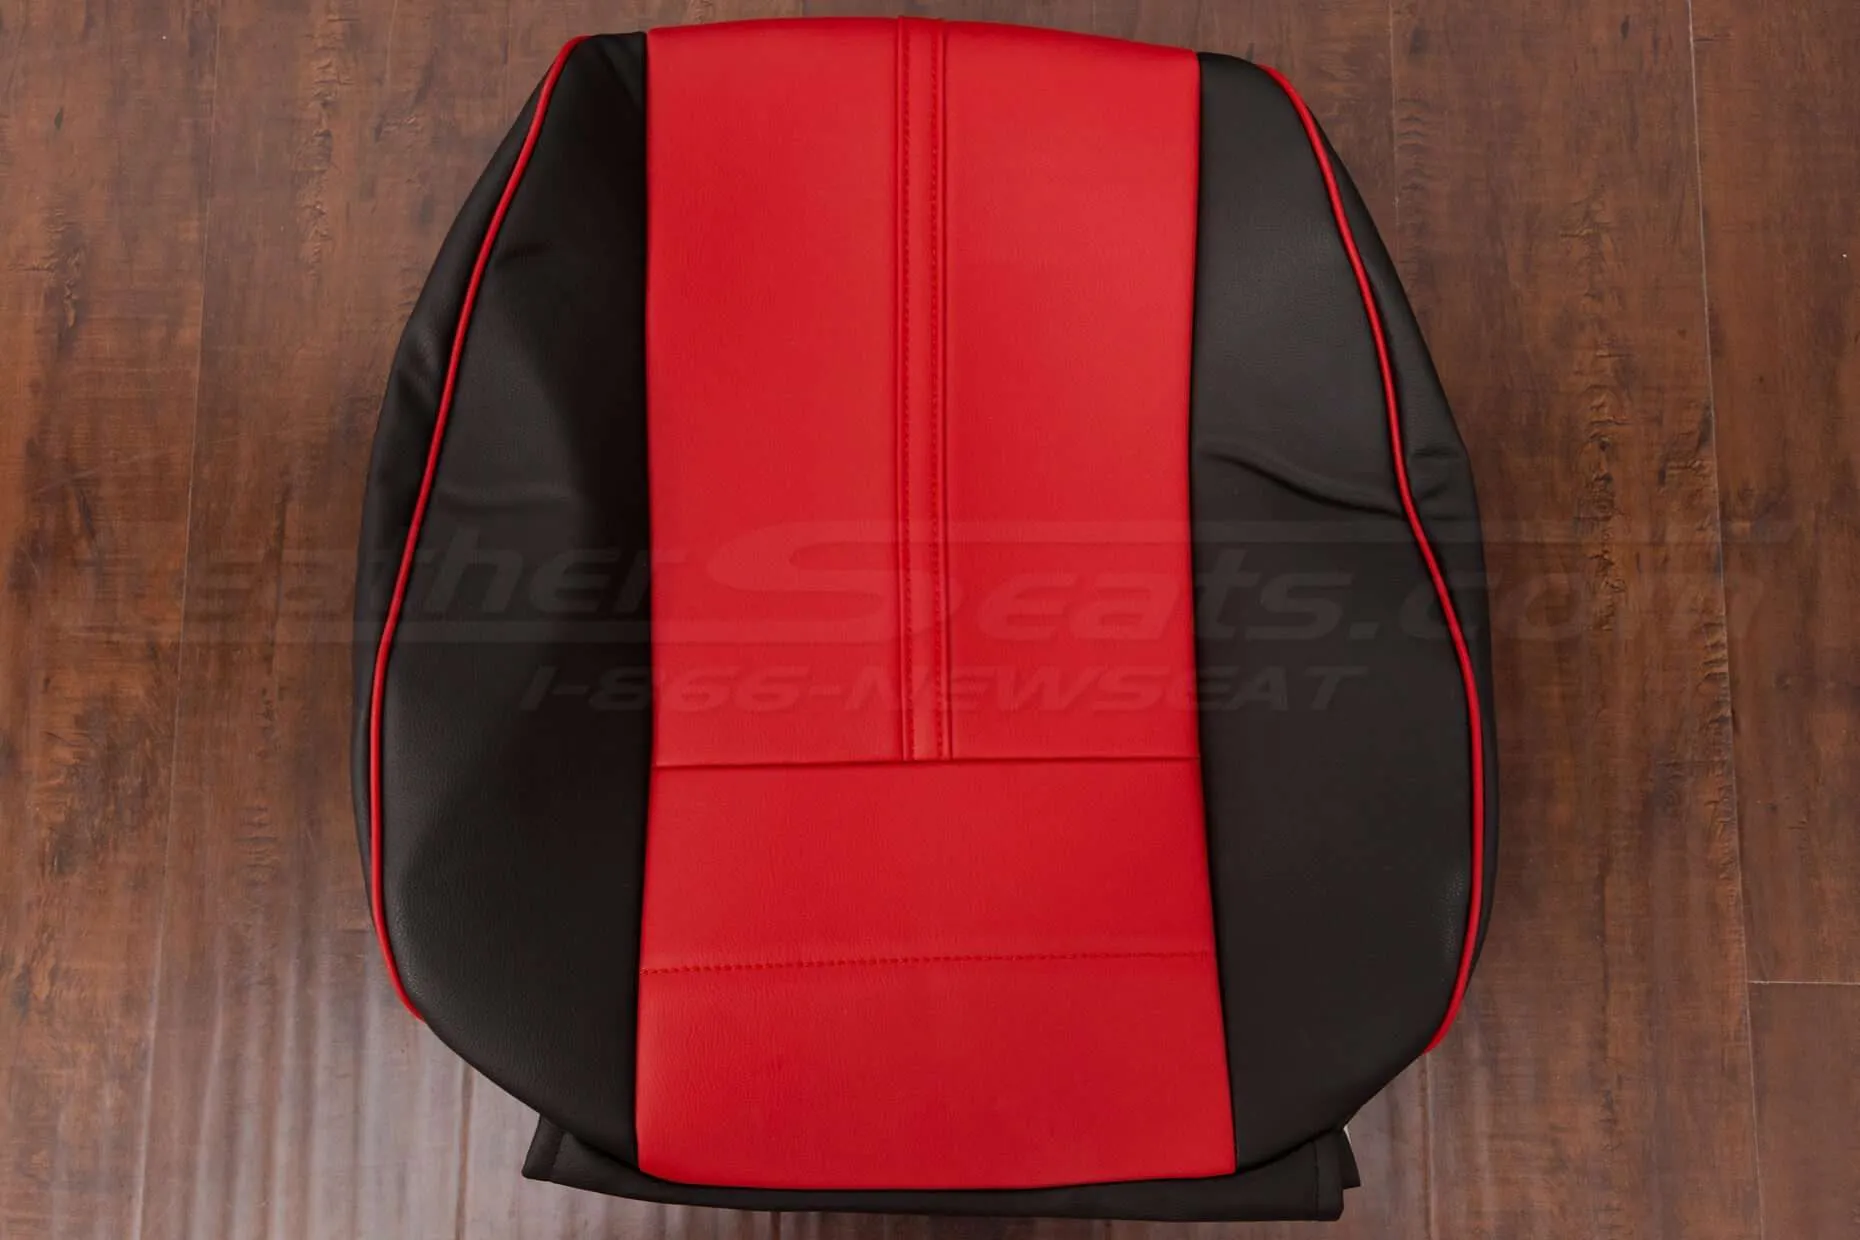 88-92 Chevrolet Camaro Upholstery Kit - Black & Bright Red - Front backrest cushion upholstery